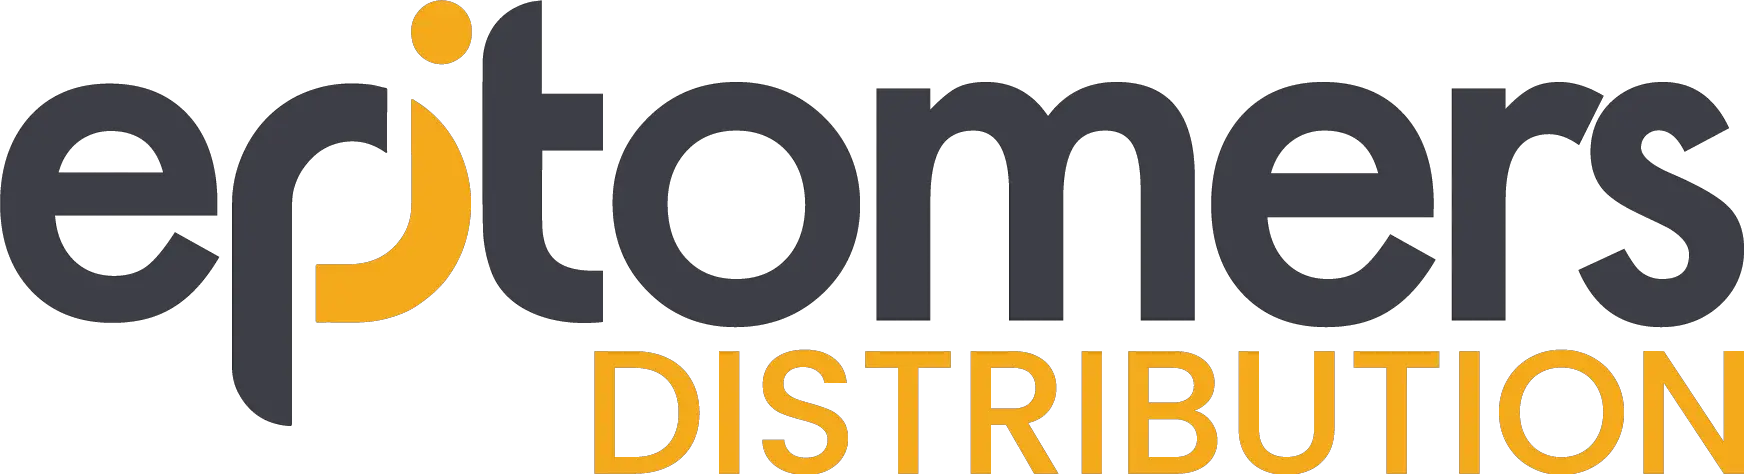 Company logo of EpitomersDistribution